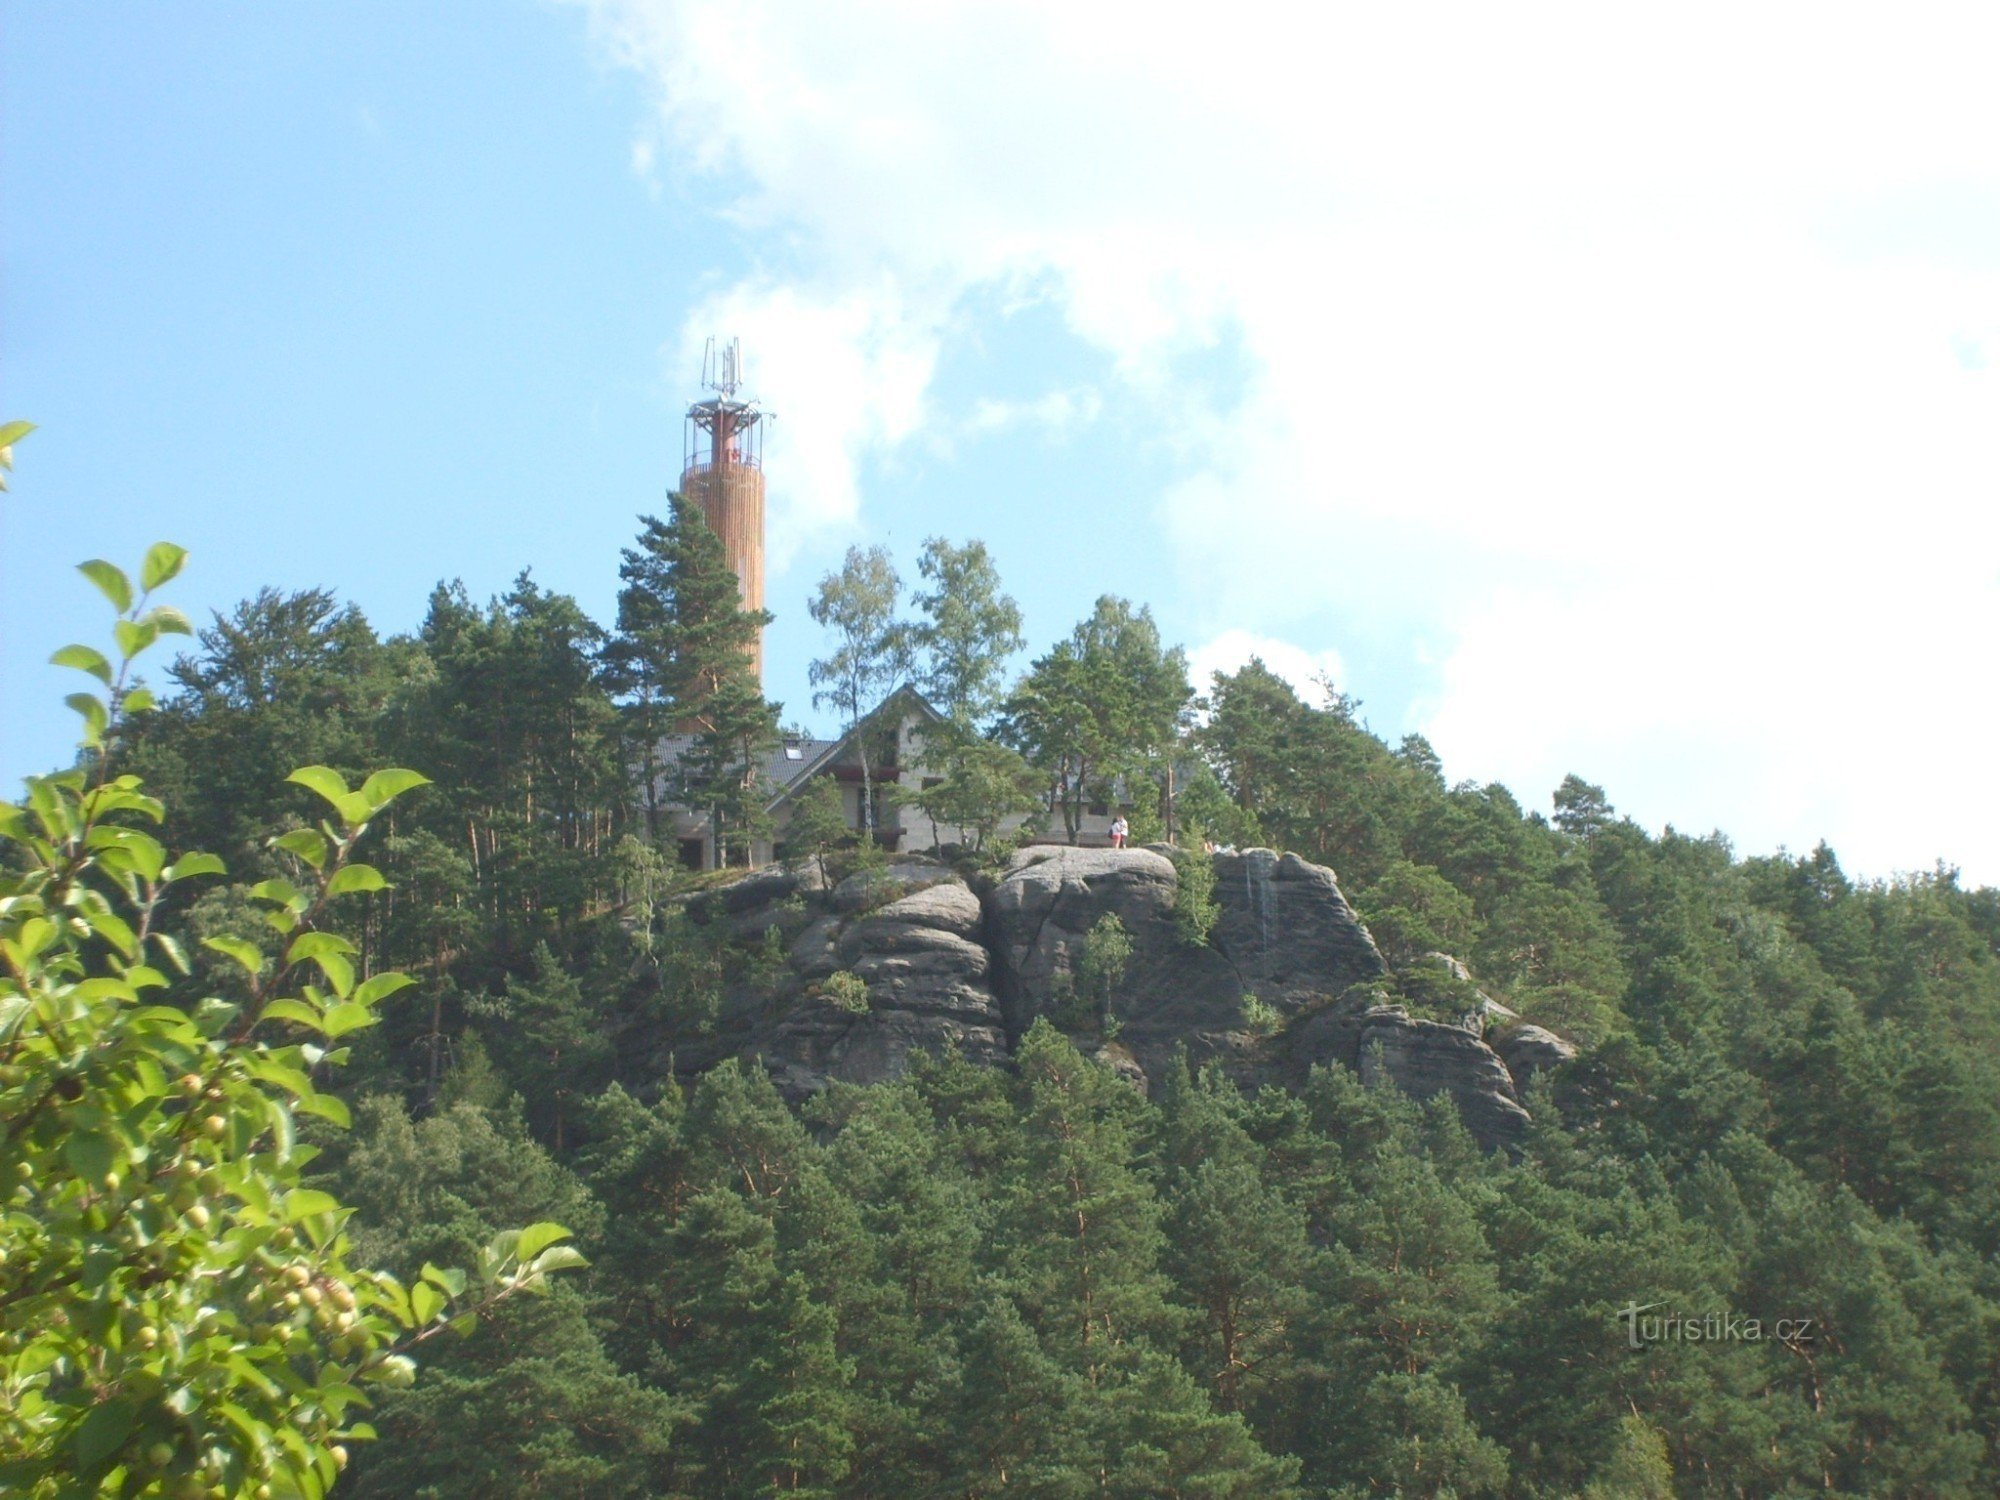 On Stráž, a newly built lookout tower